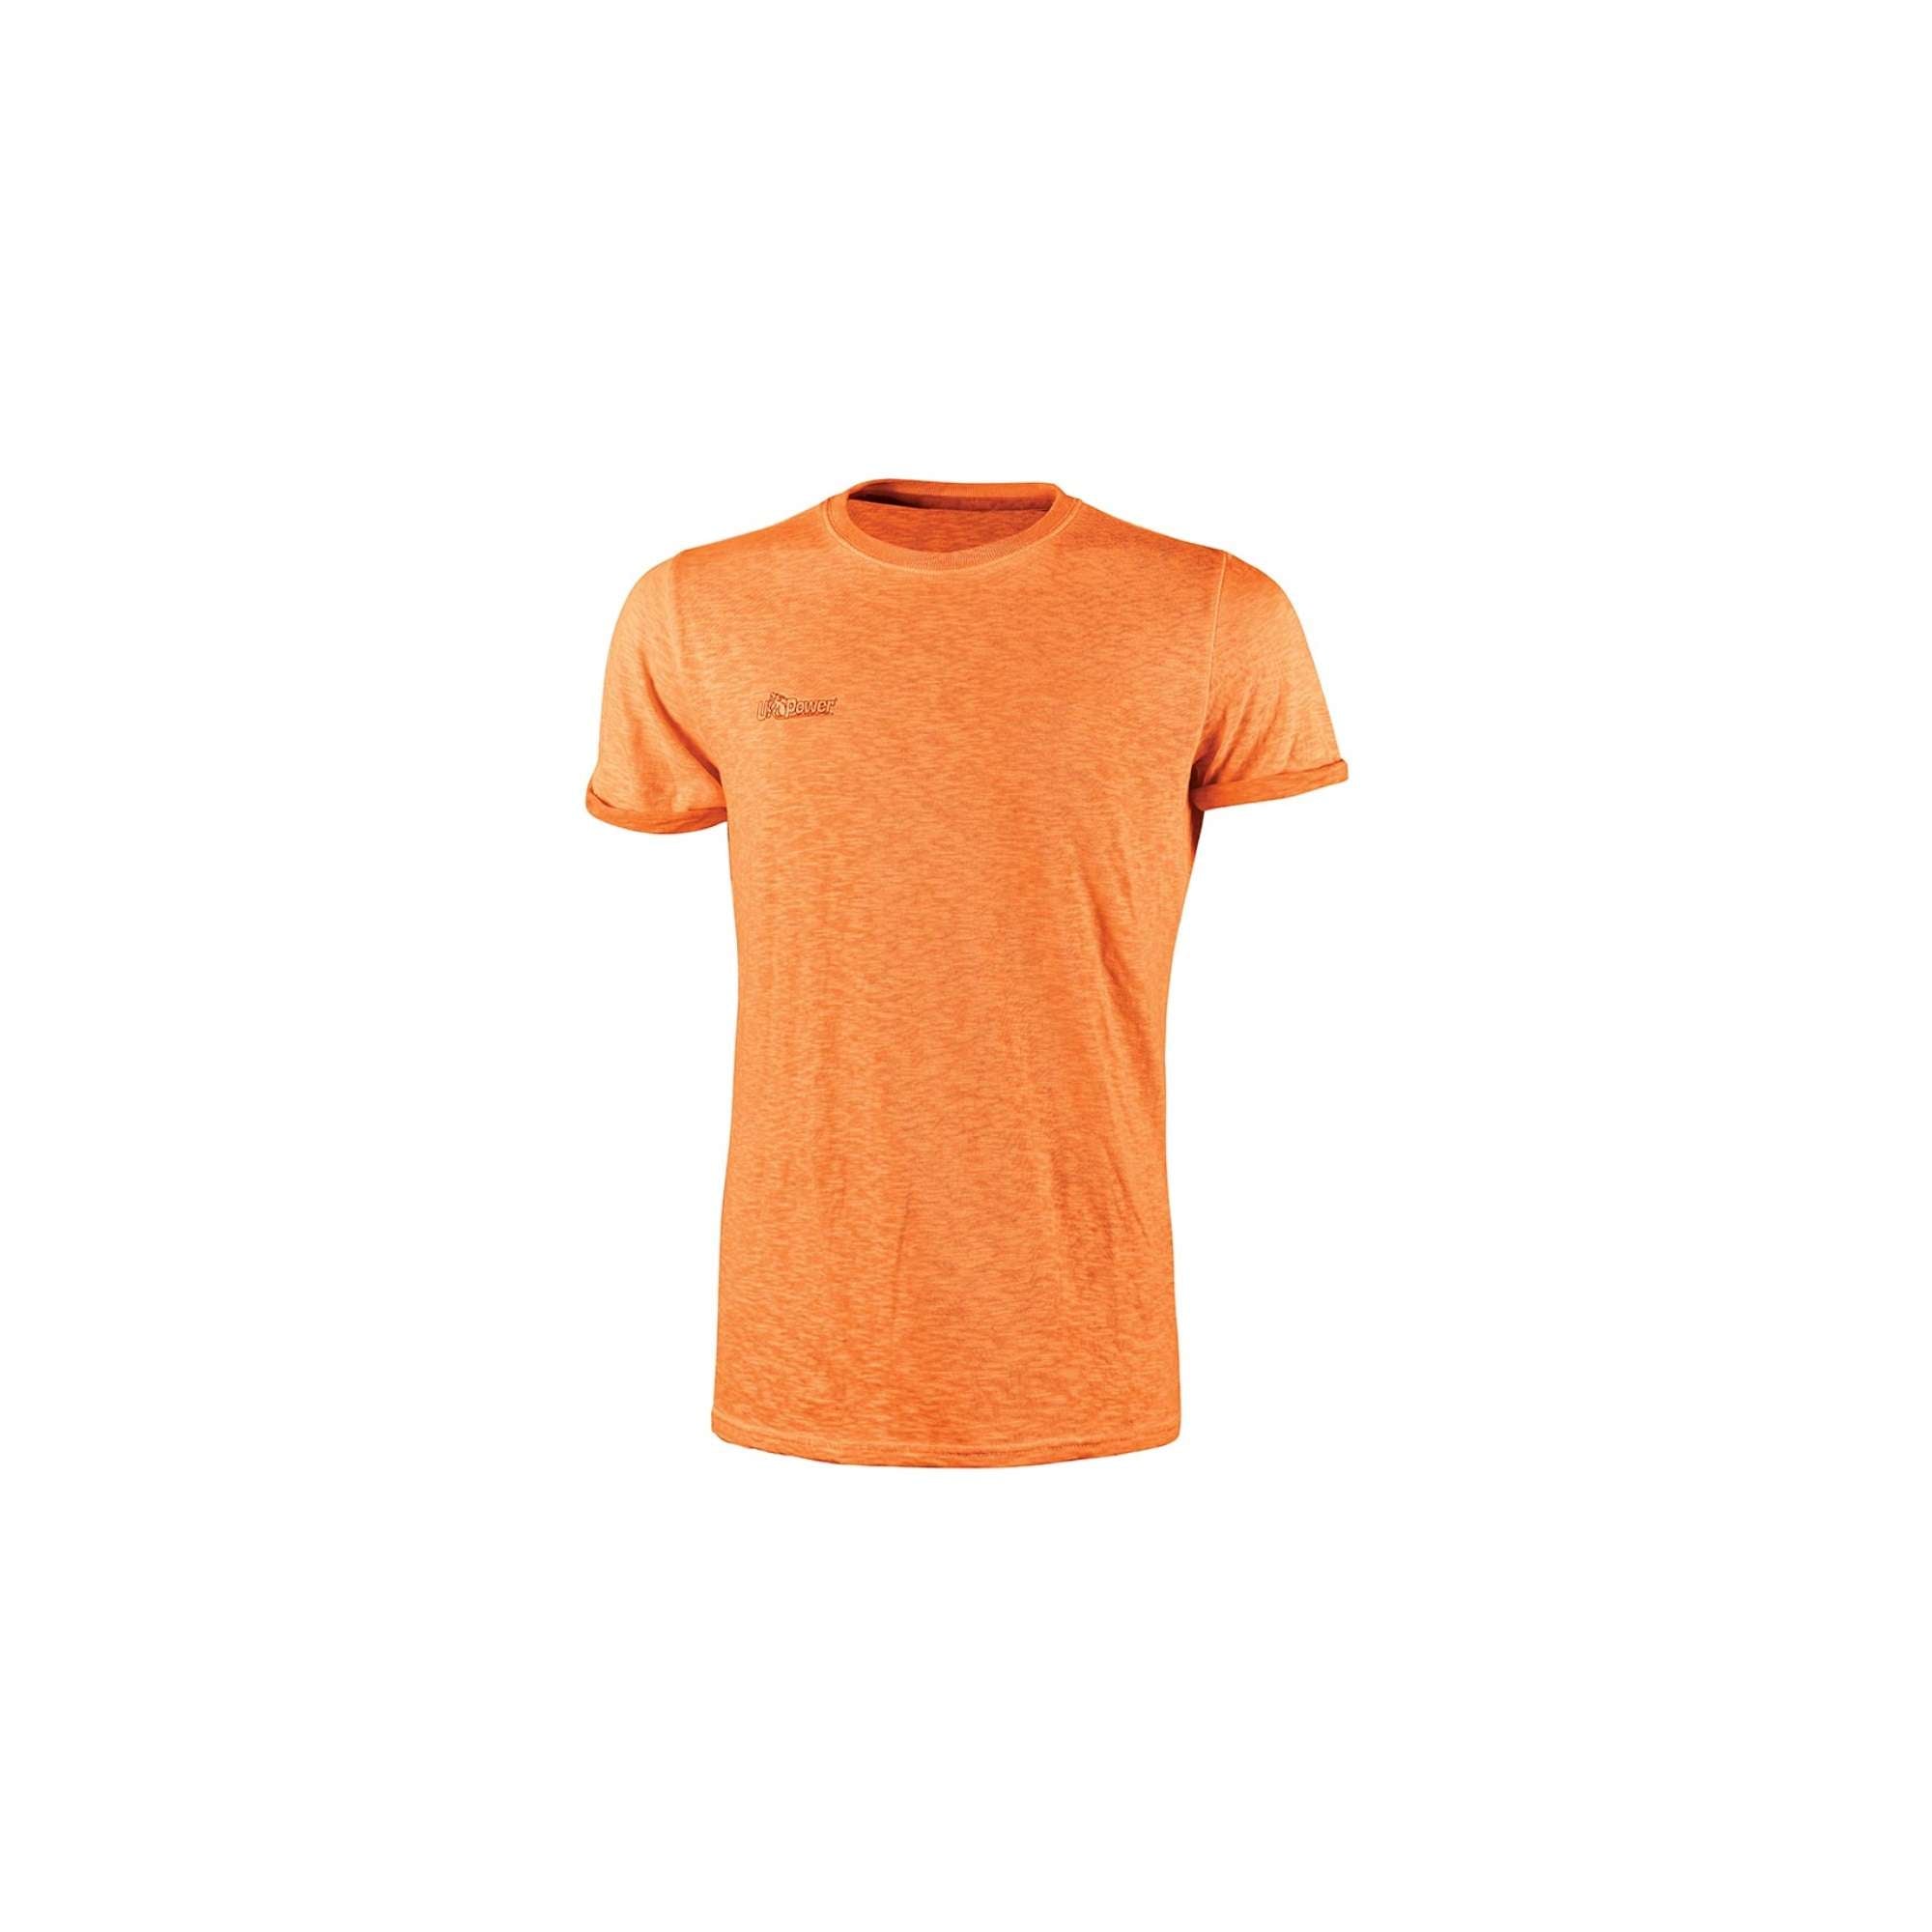 T-Shirt orange fluo - U-Power EY195OF